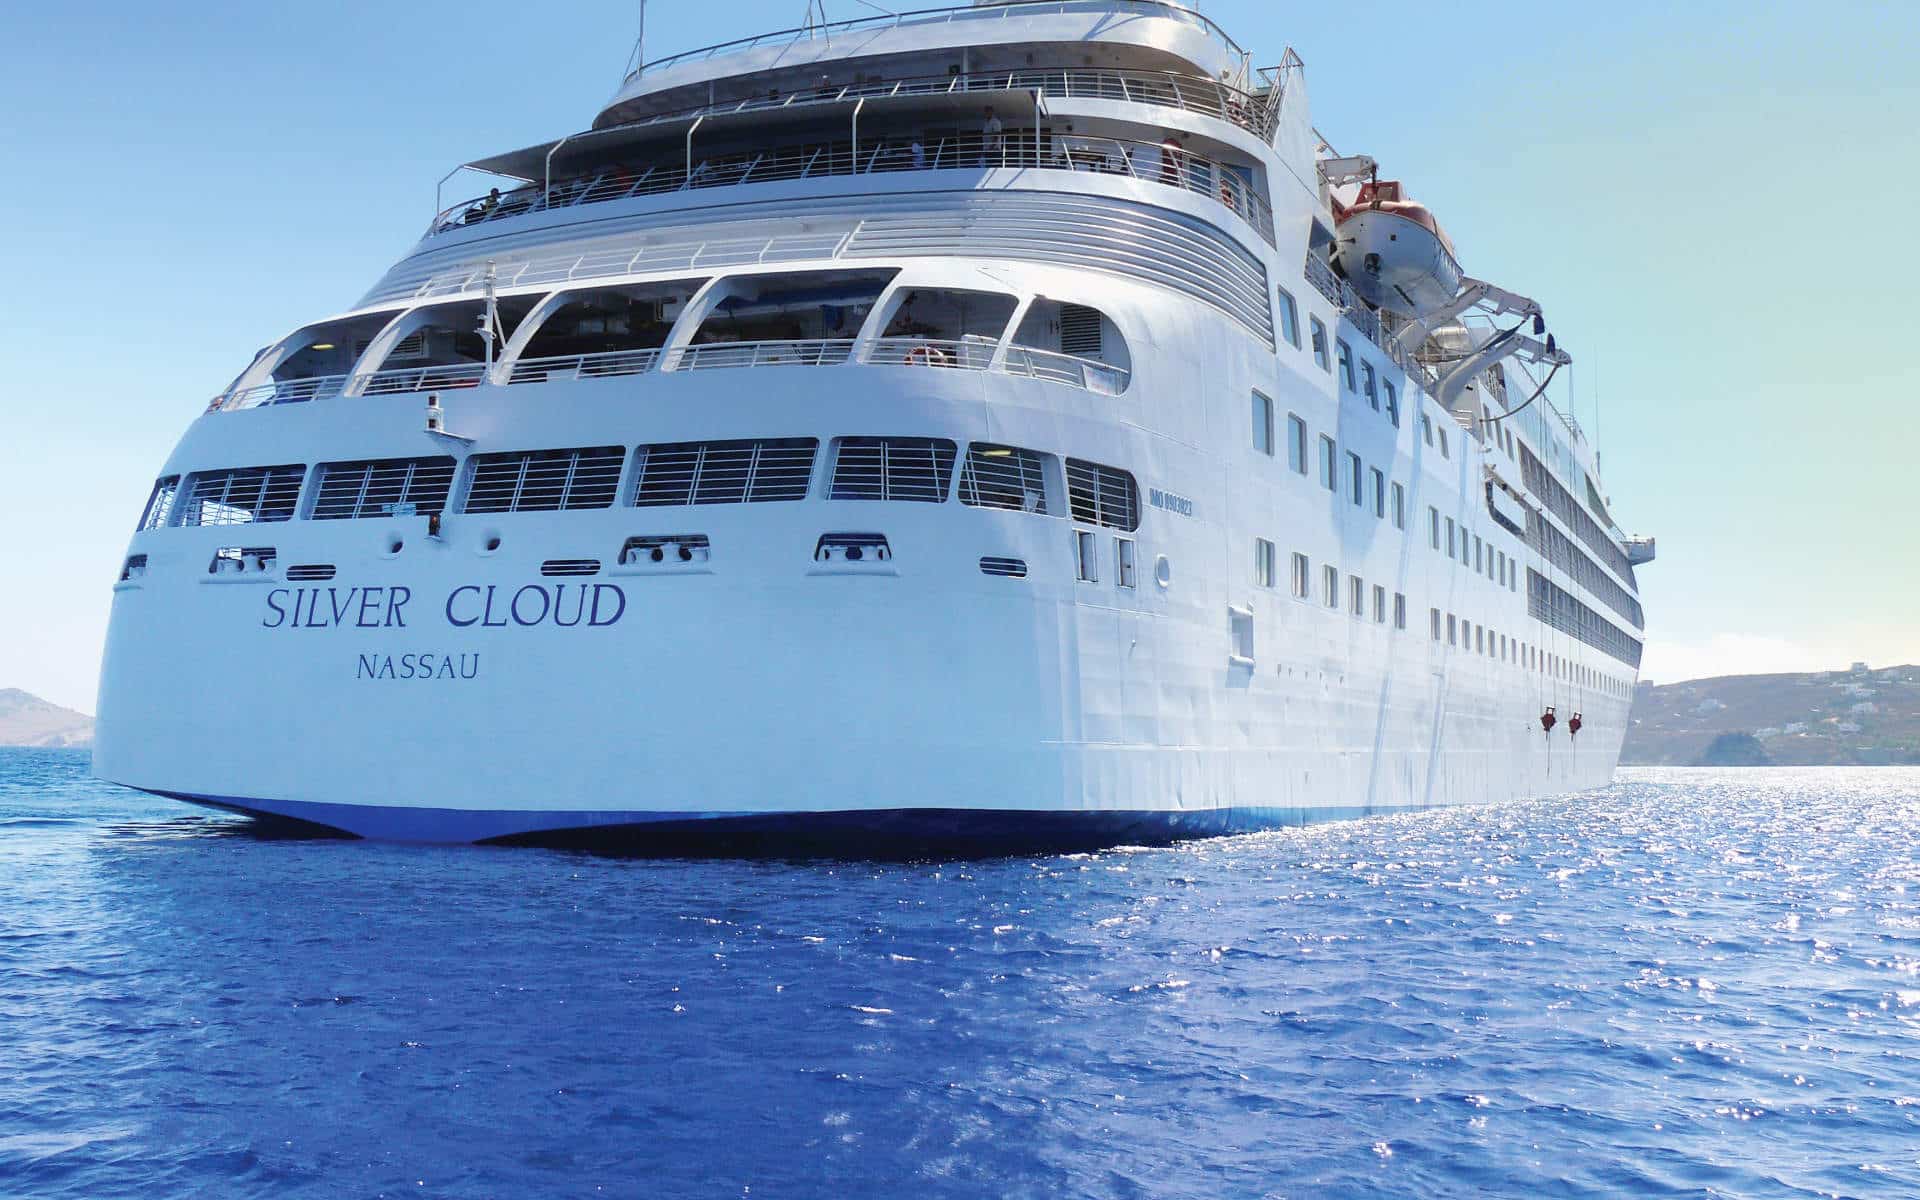 The Silver Cloud cruise ship.